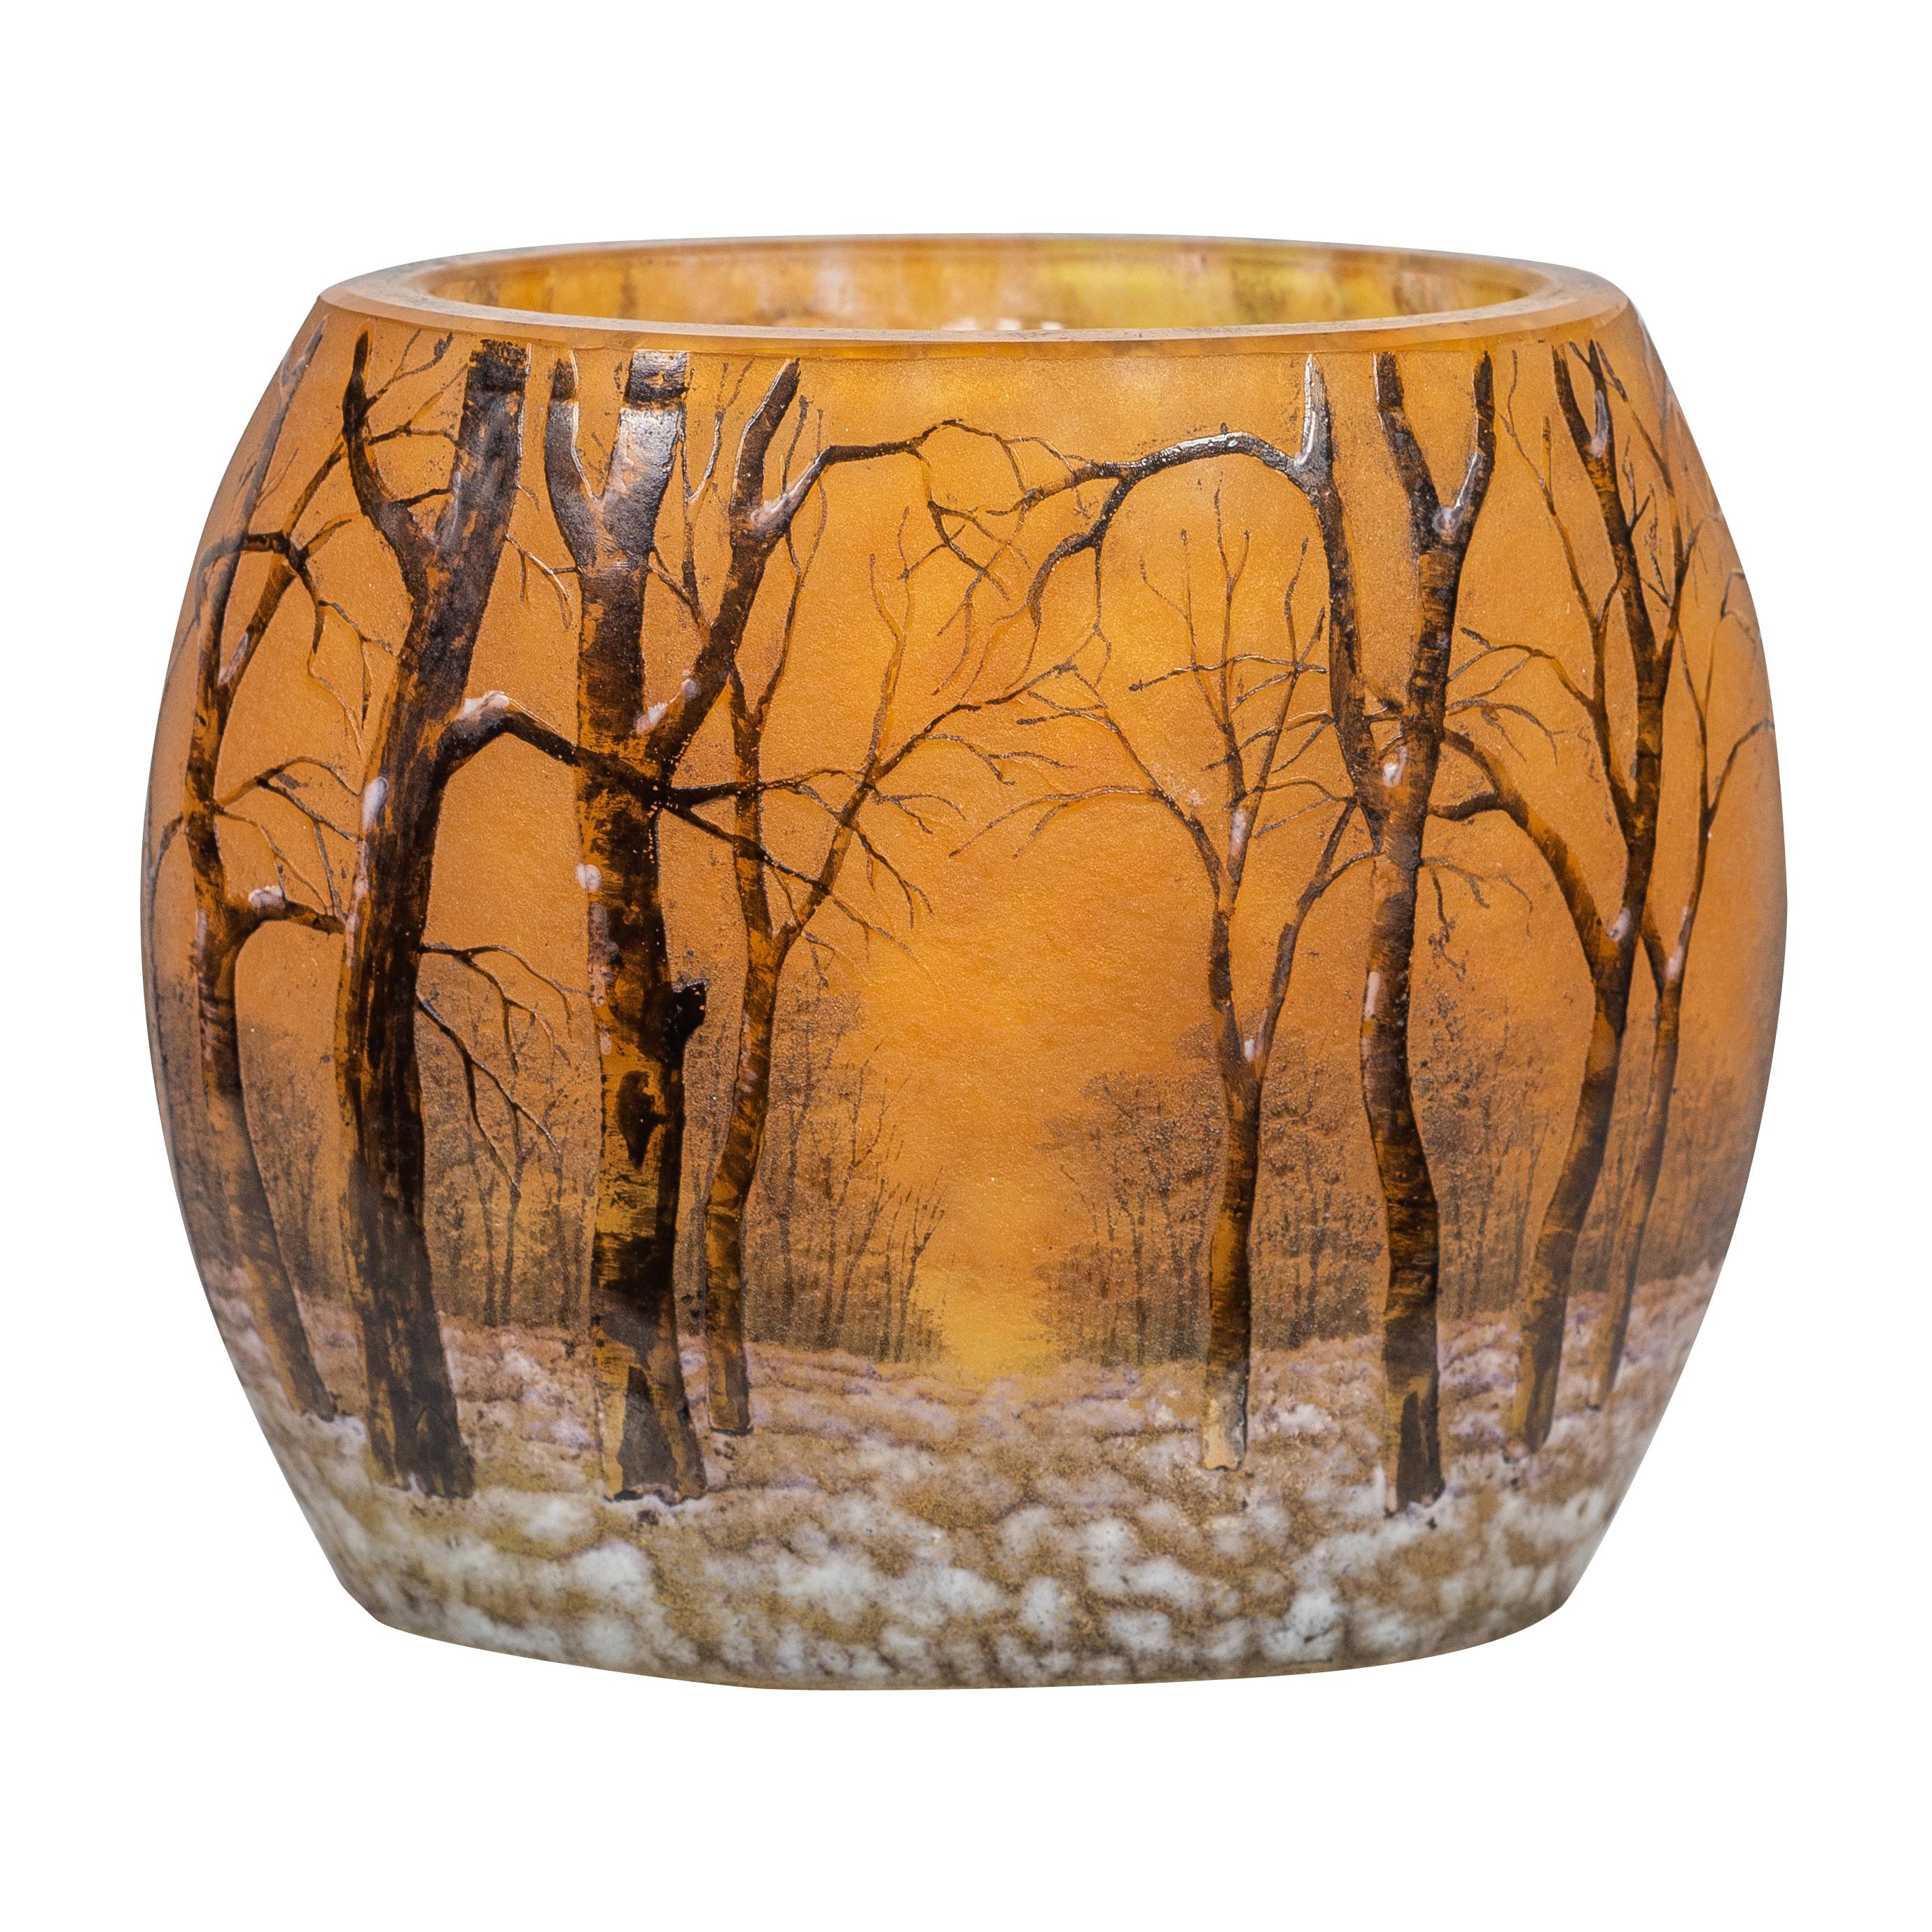 Daum Nancy Enameled and Internally Decorated Glass Vase, "Winter Landscape"